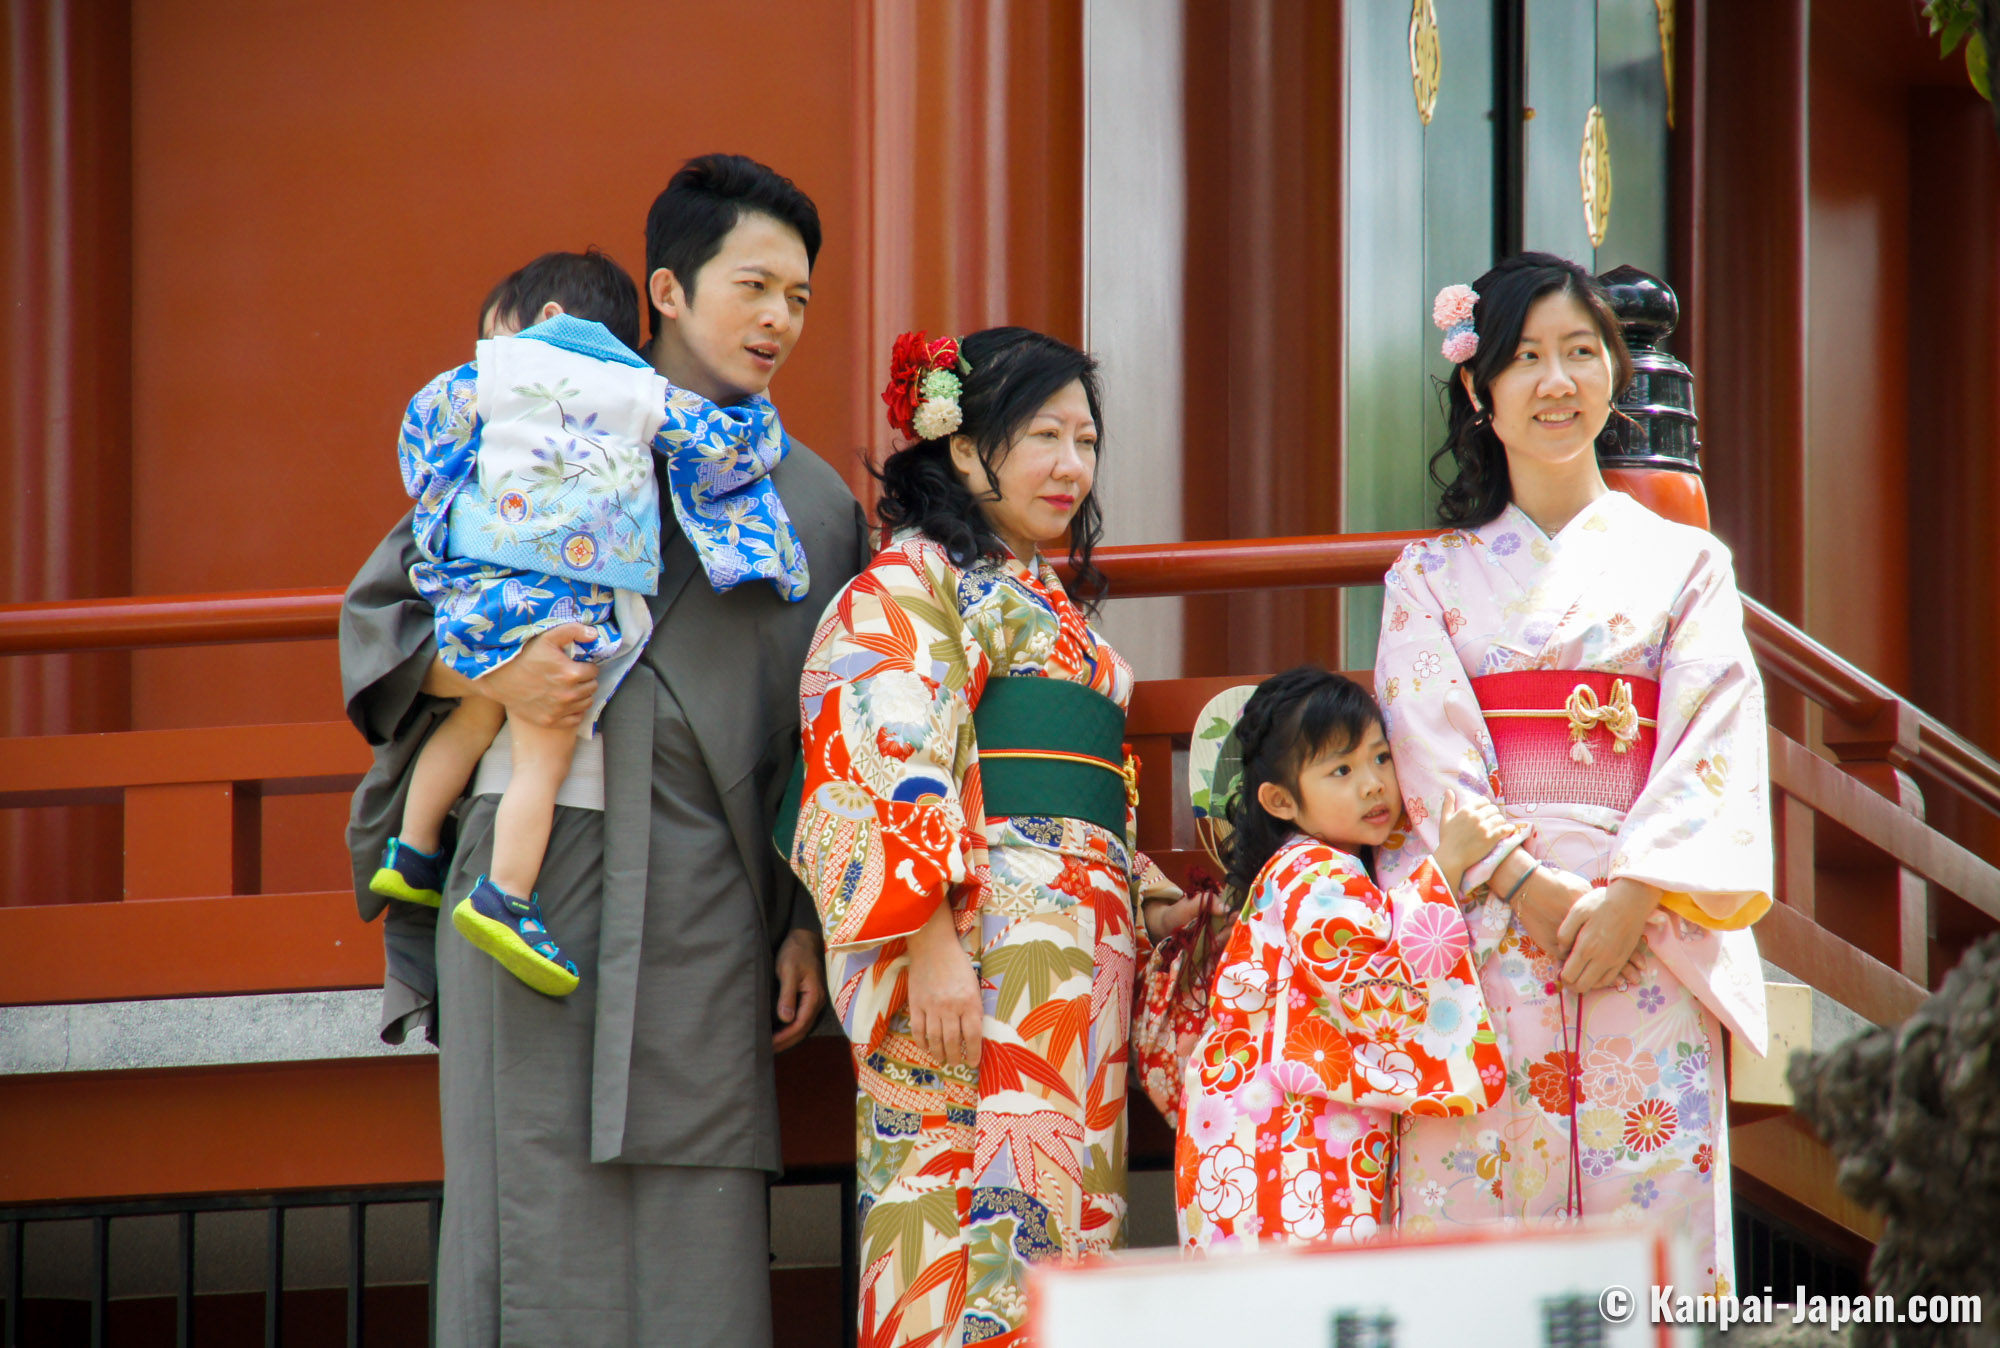 Yukata vs Kimono, The Secret Culture Behind The Japanese National